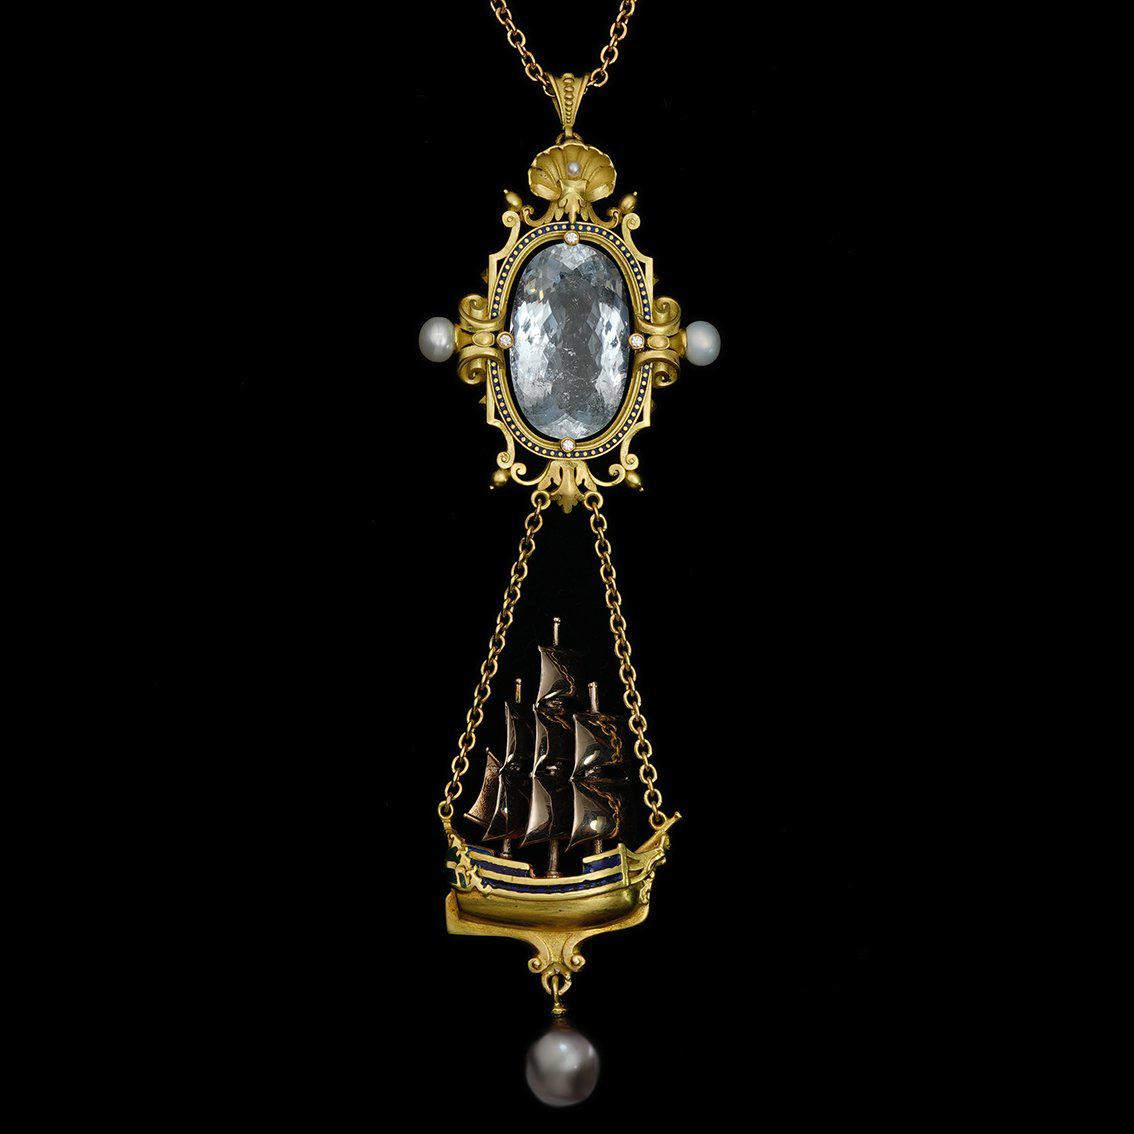 Aquamarine, Diamonds, Pearls, Enamel, 18kt Gold Antique Style Pendant Necklace For Sale 3